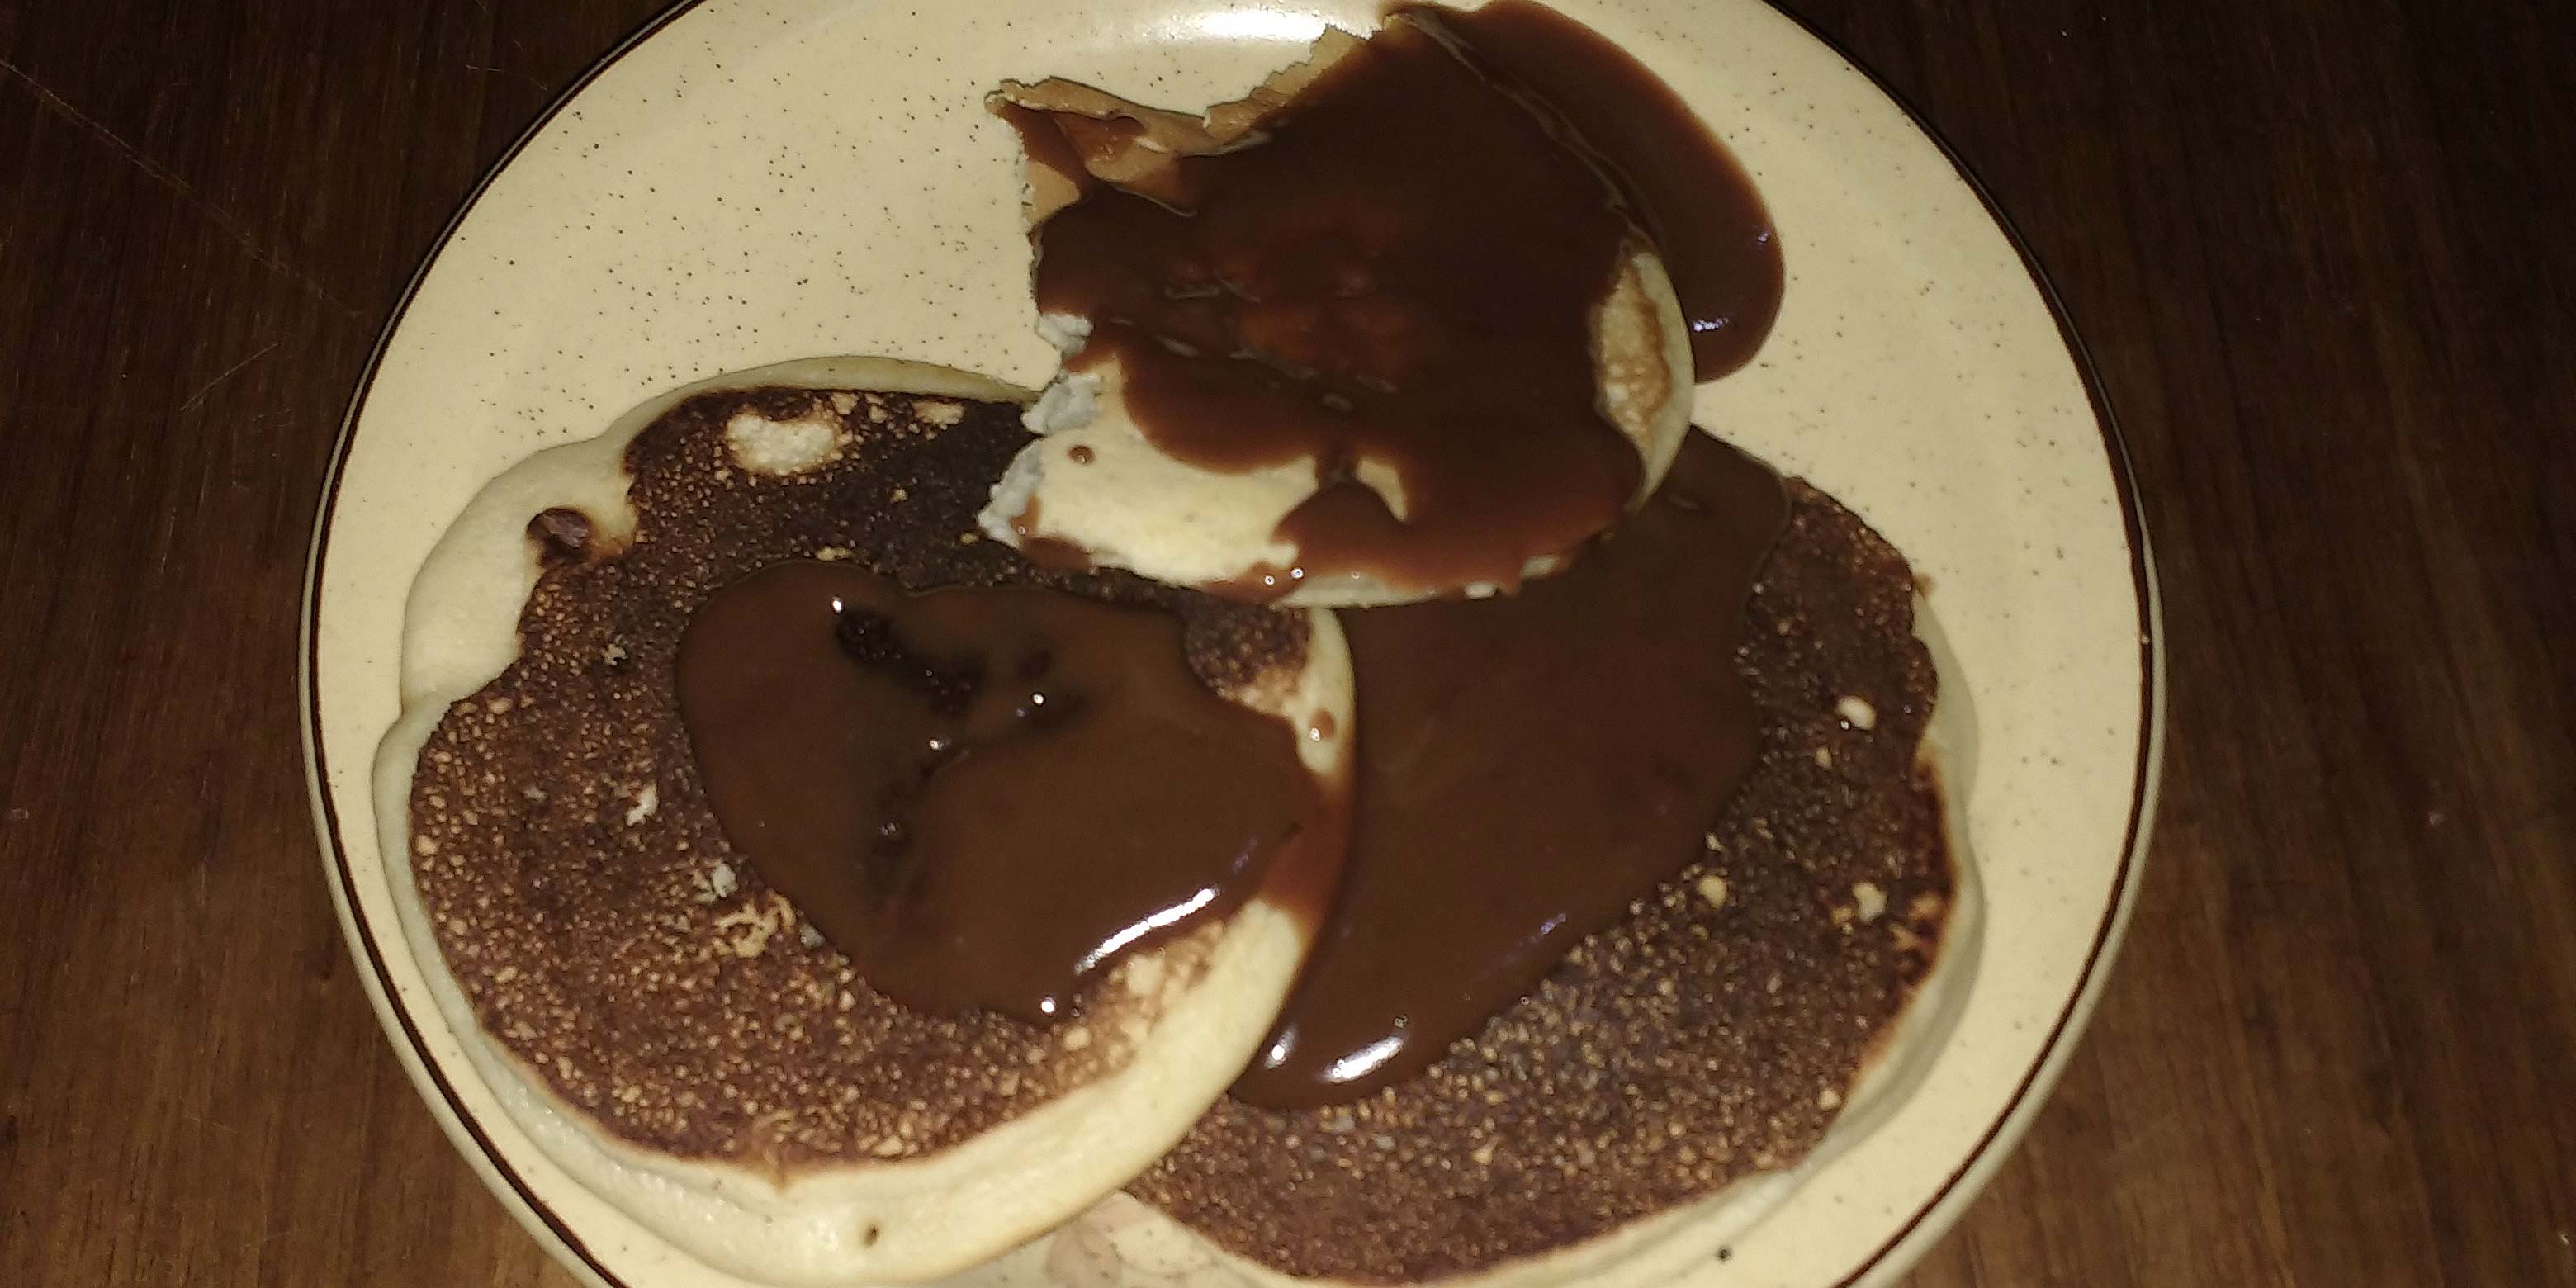 Pancakes with my chocolate sauce